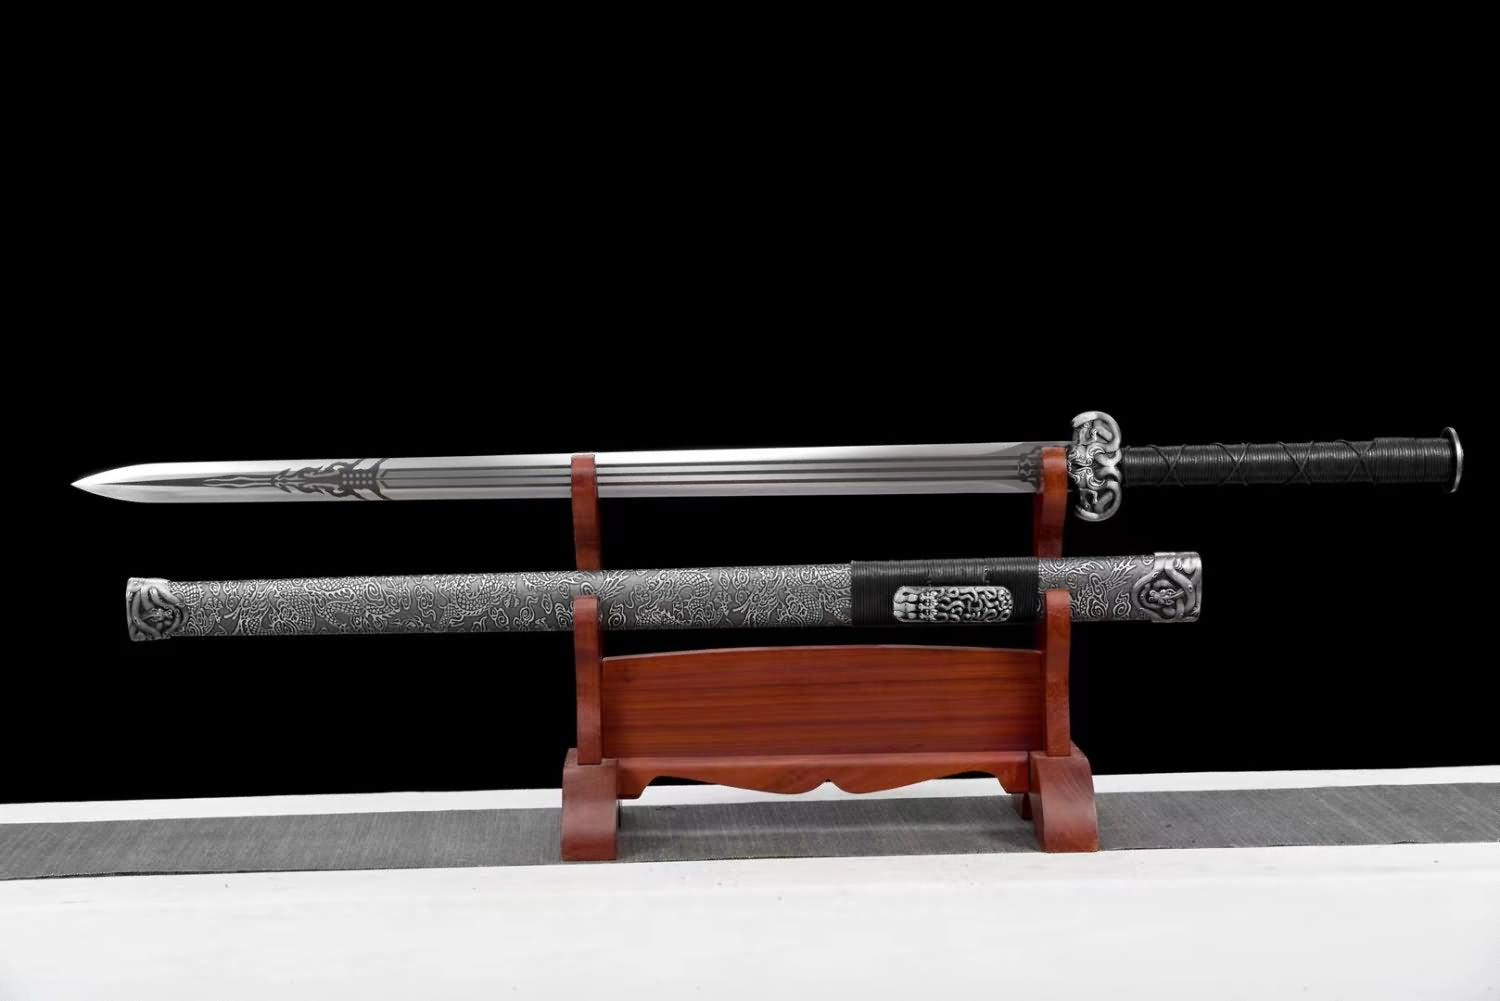 Han Sword - High Carbon Steel Blade, Silver Gray Scabbard - Martial Arts Weapon